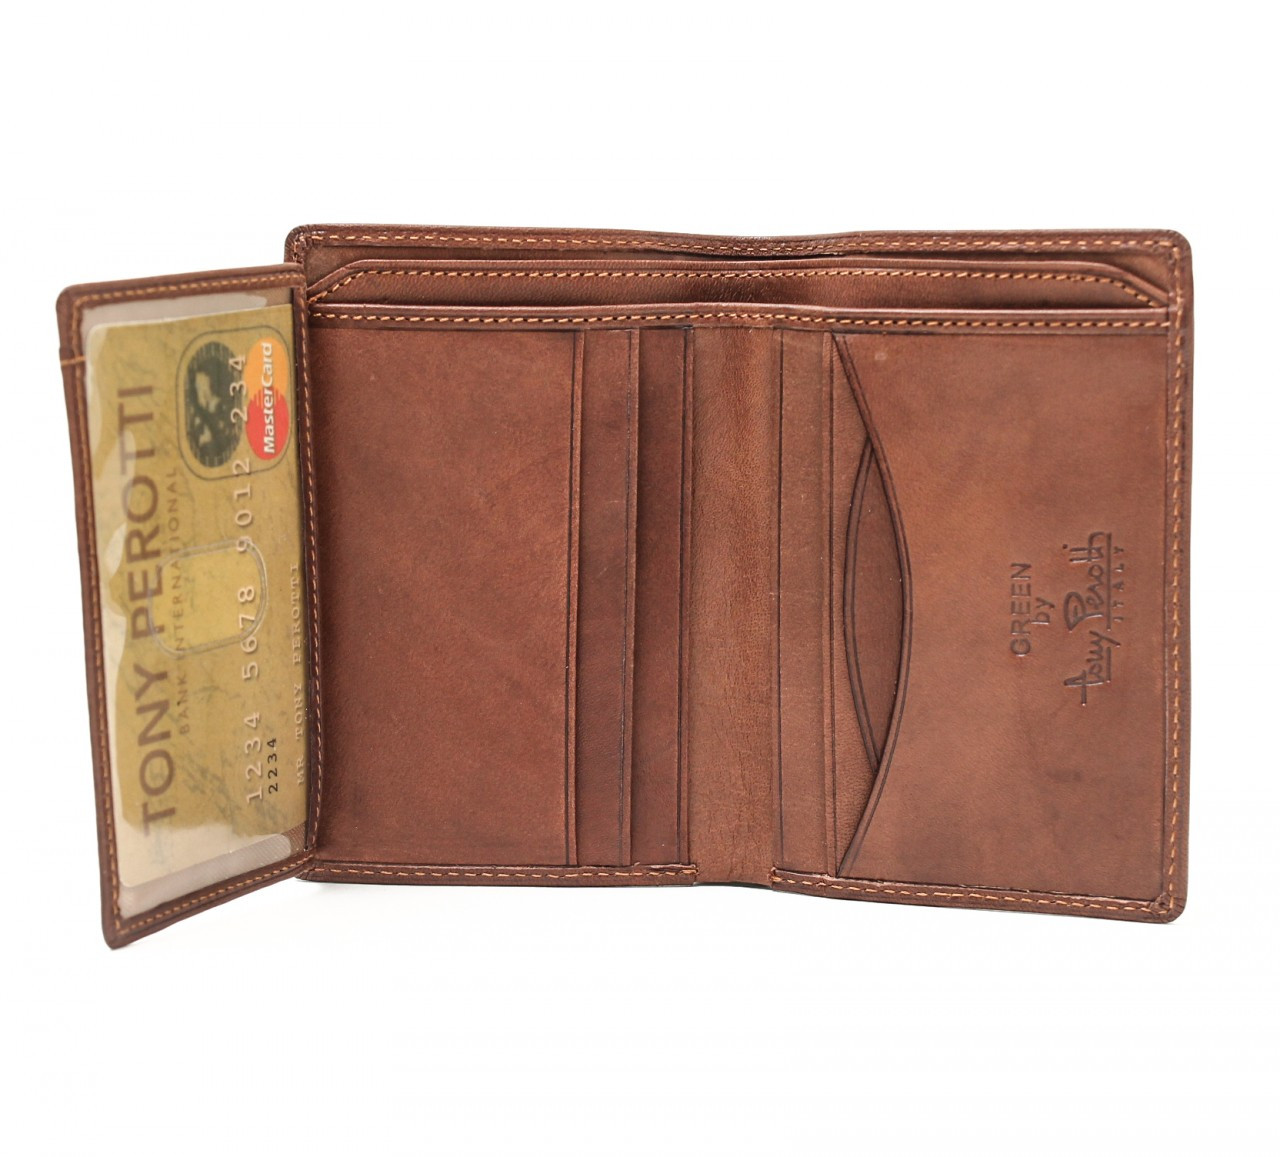 Tony Perotti Tony Perotti Prima Front Pocket Wallet w/ ID Window Brown Leather | eBay